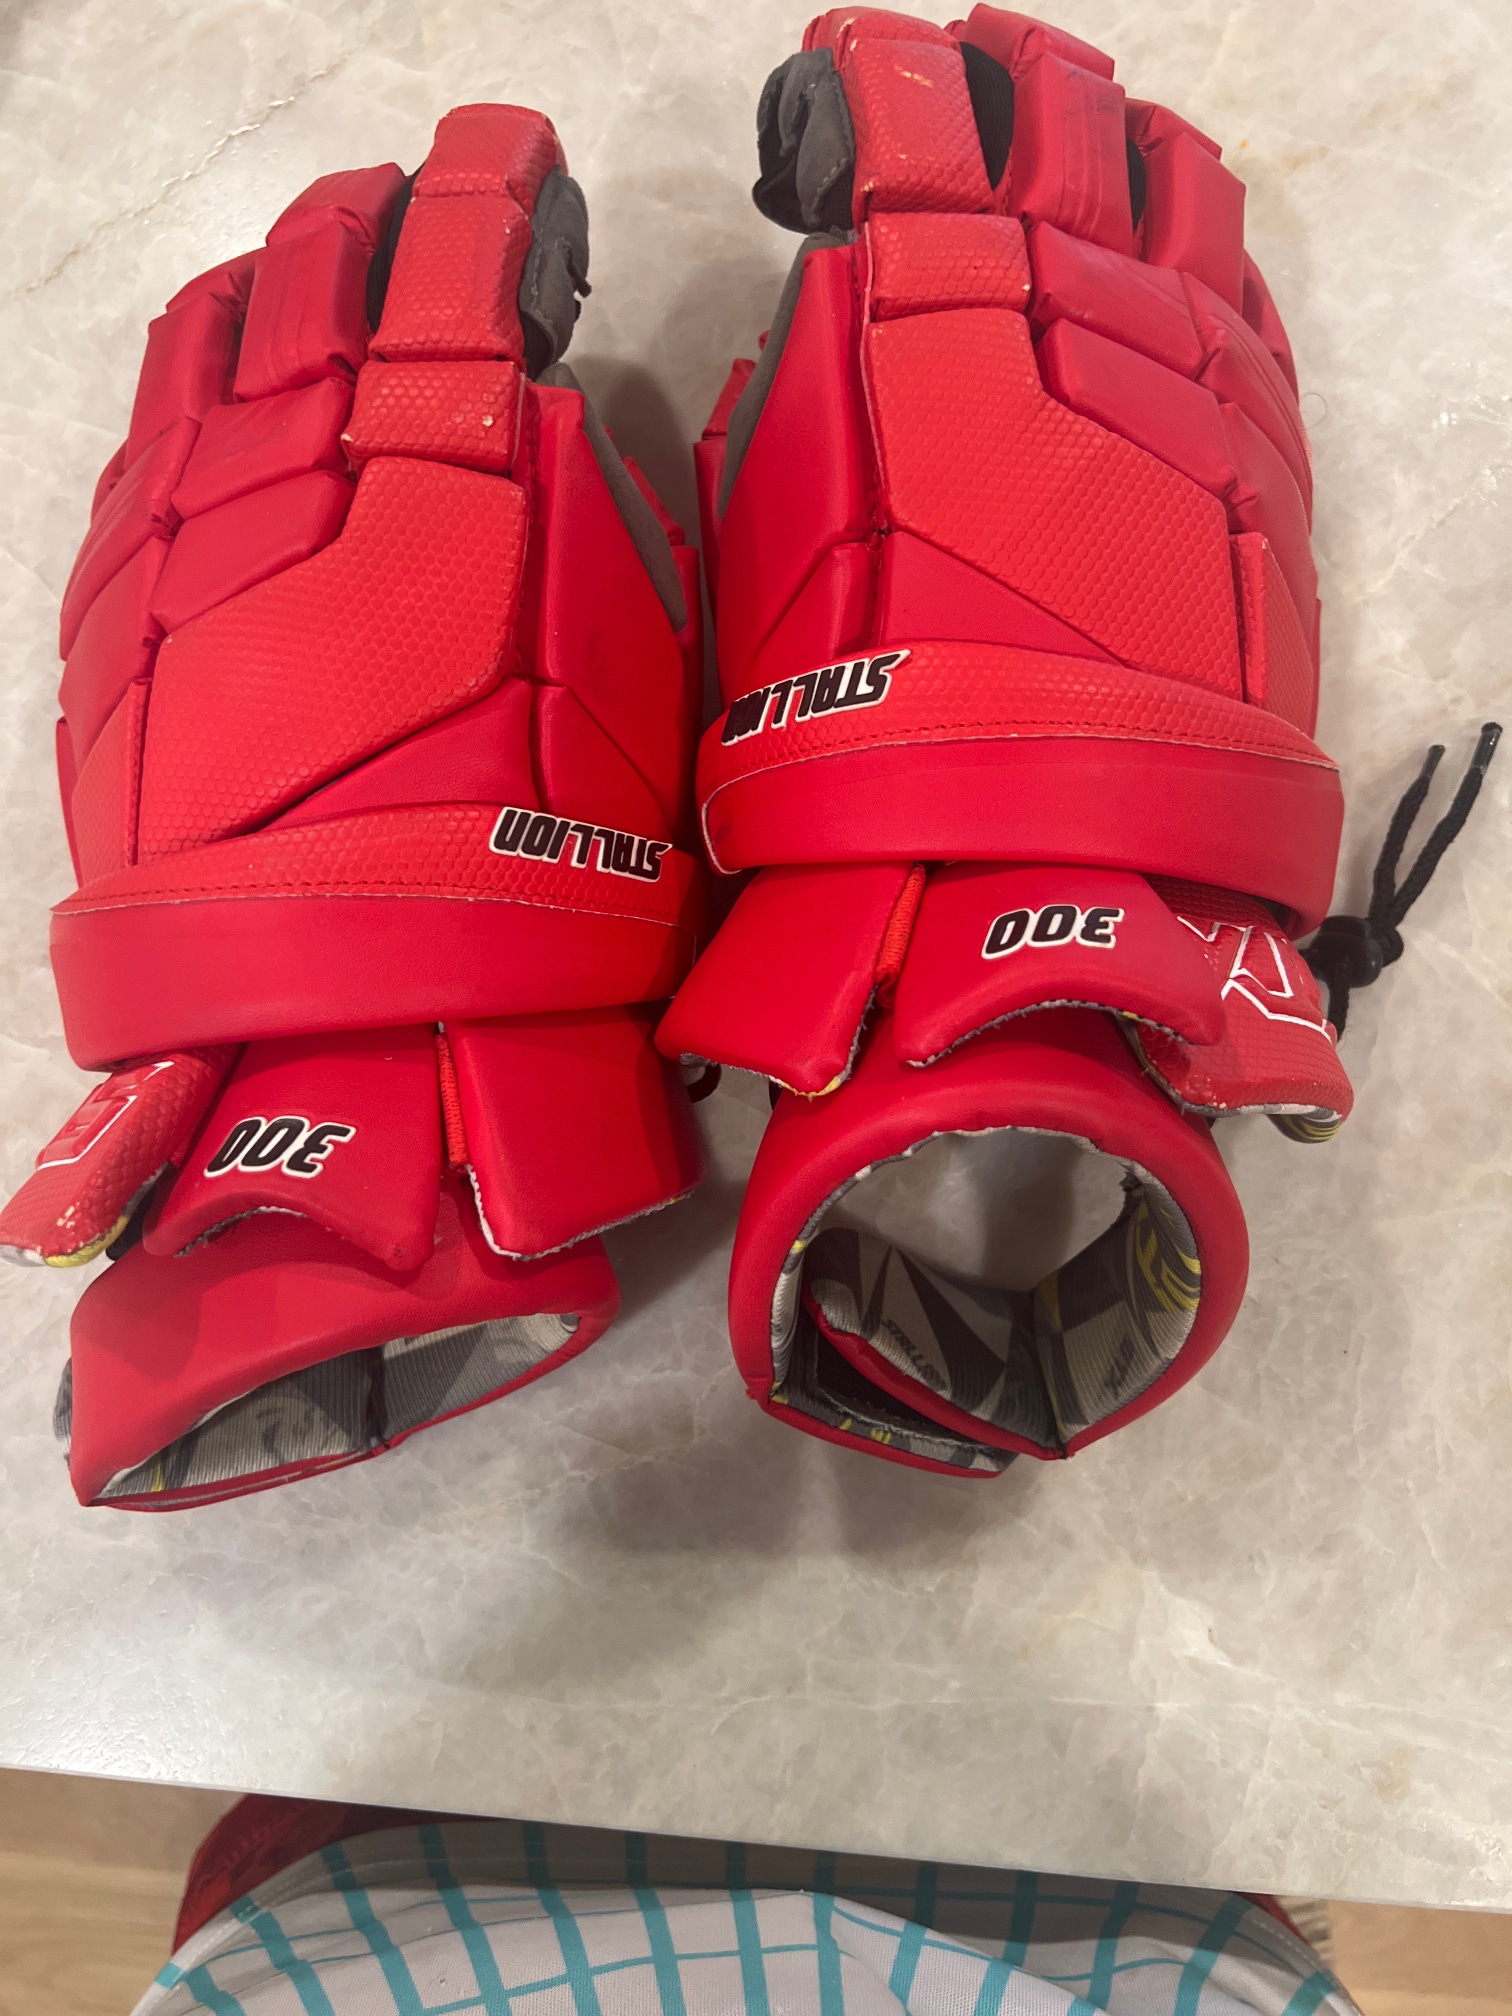 Used Player's STX Stallion 300 Lacrosse Gloves 13"